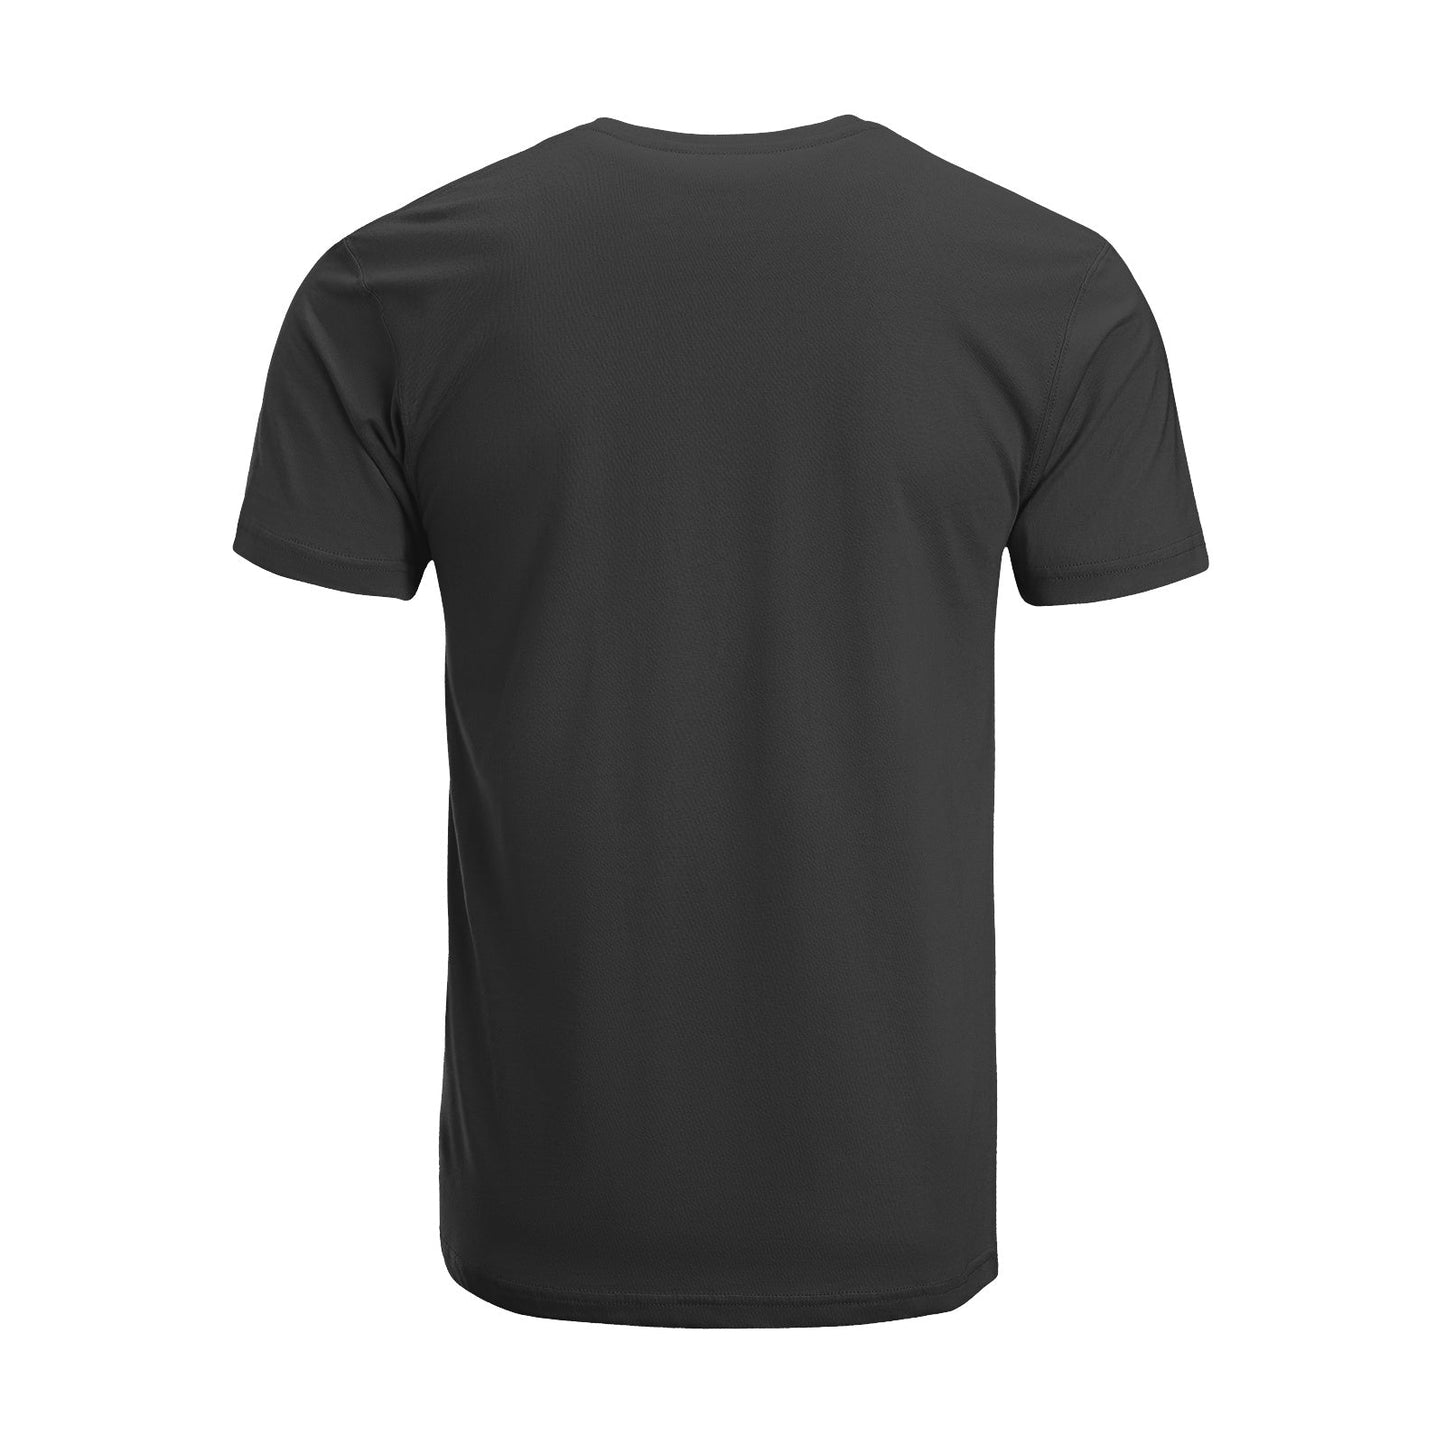 Unisex Short Sleeve Crew Neck Cotton Jersey T-Shirt DOG 47